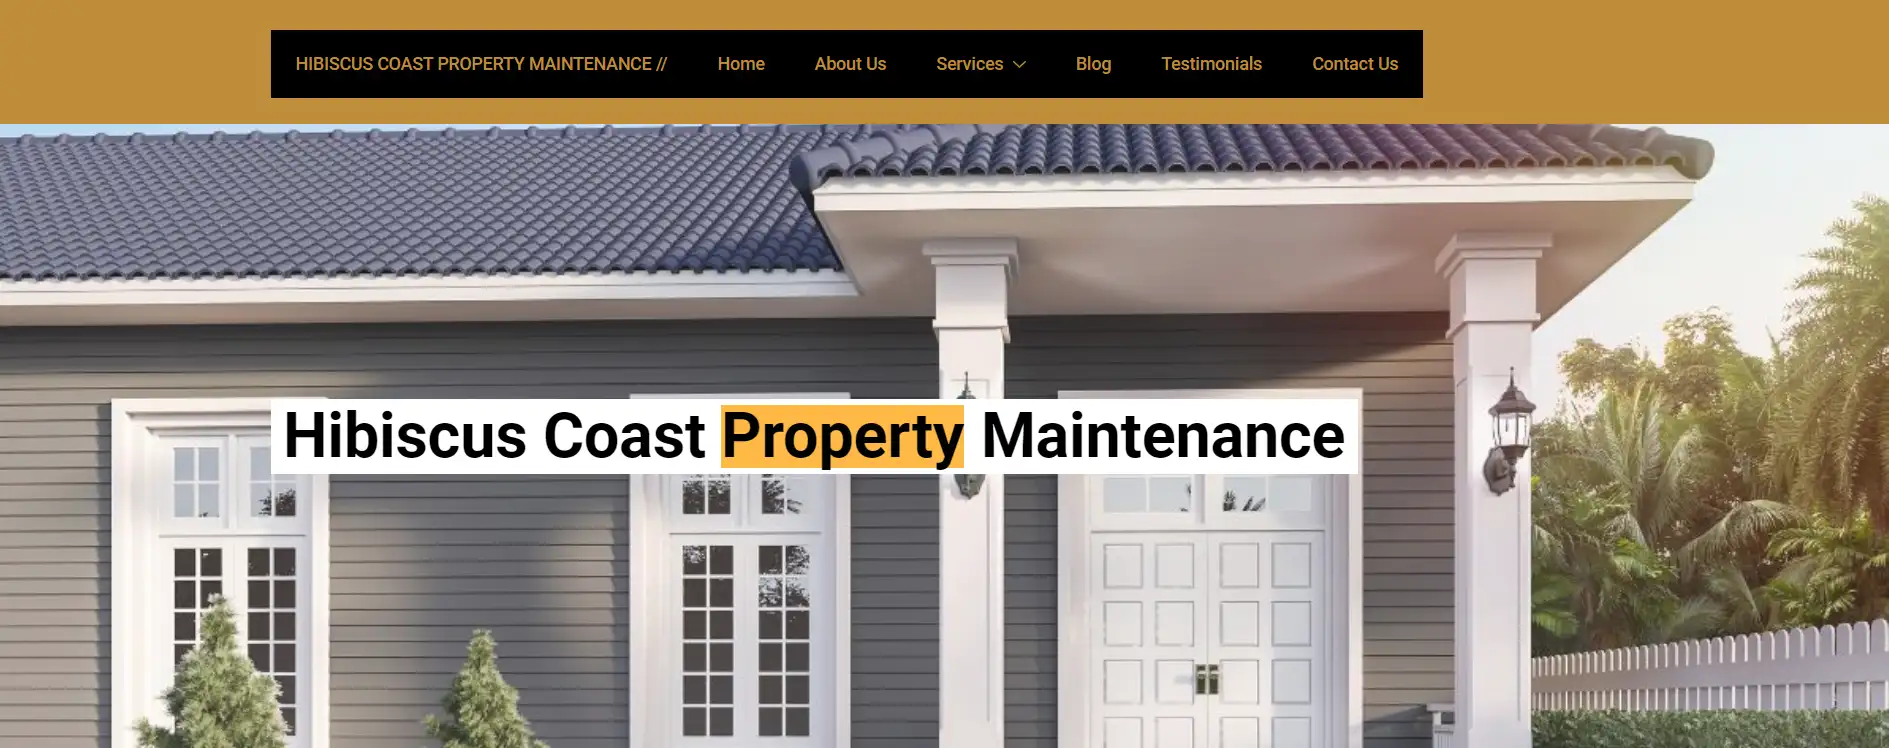 Hibiscus Coast Property Maintenance